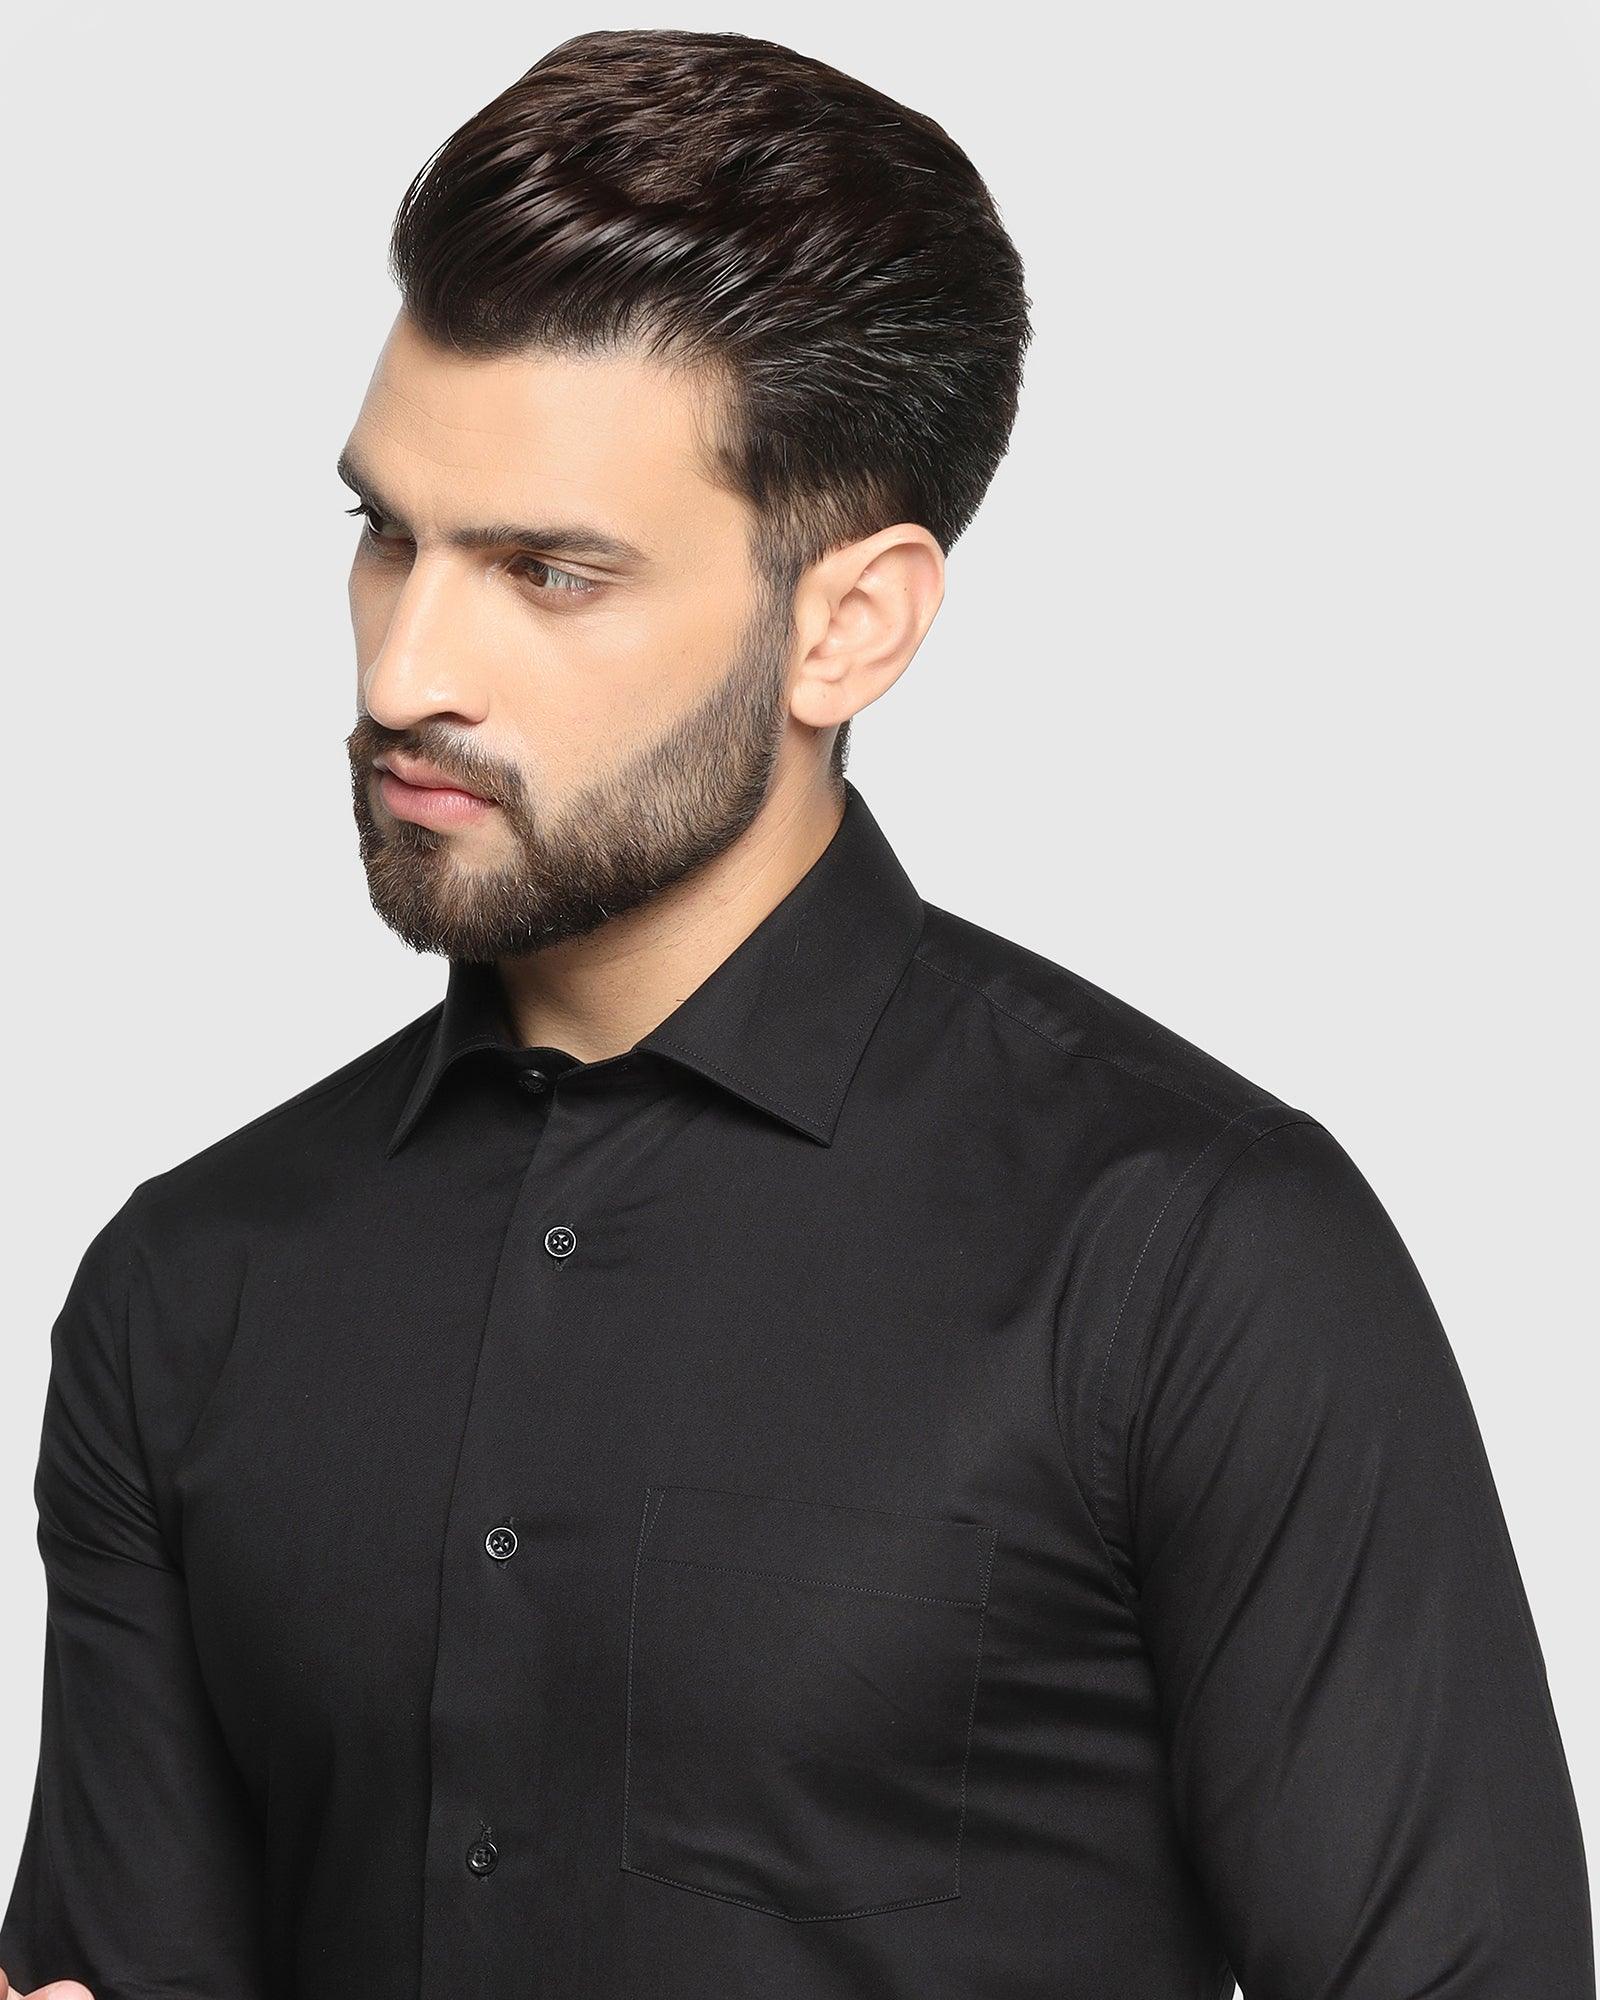 Formal Black Solid Shirt - Otto